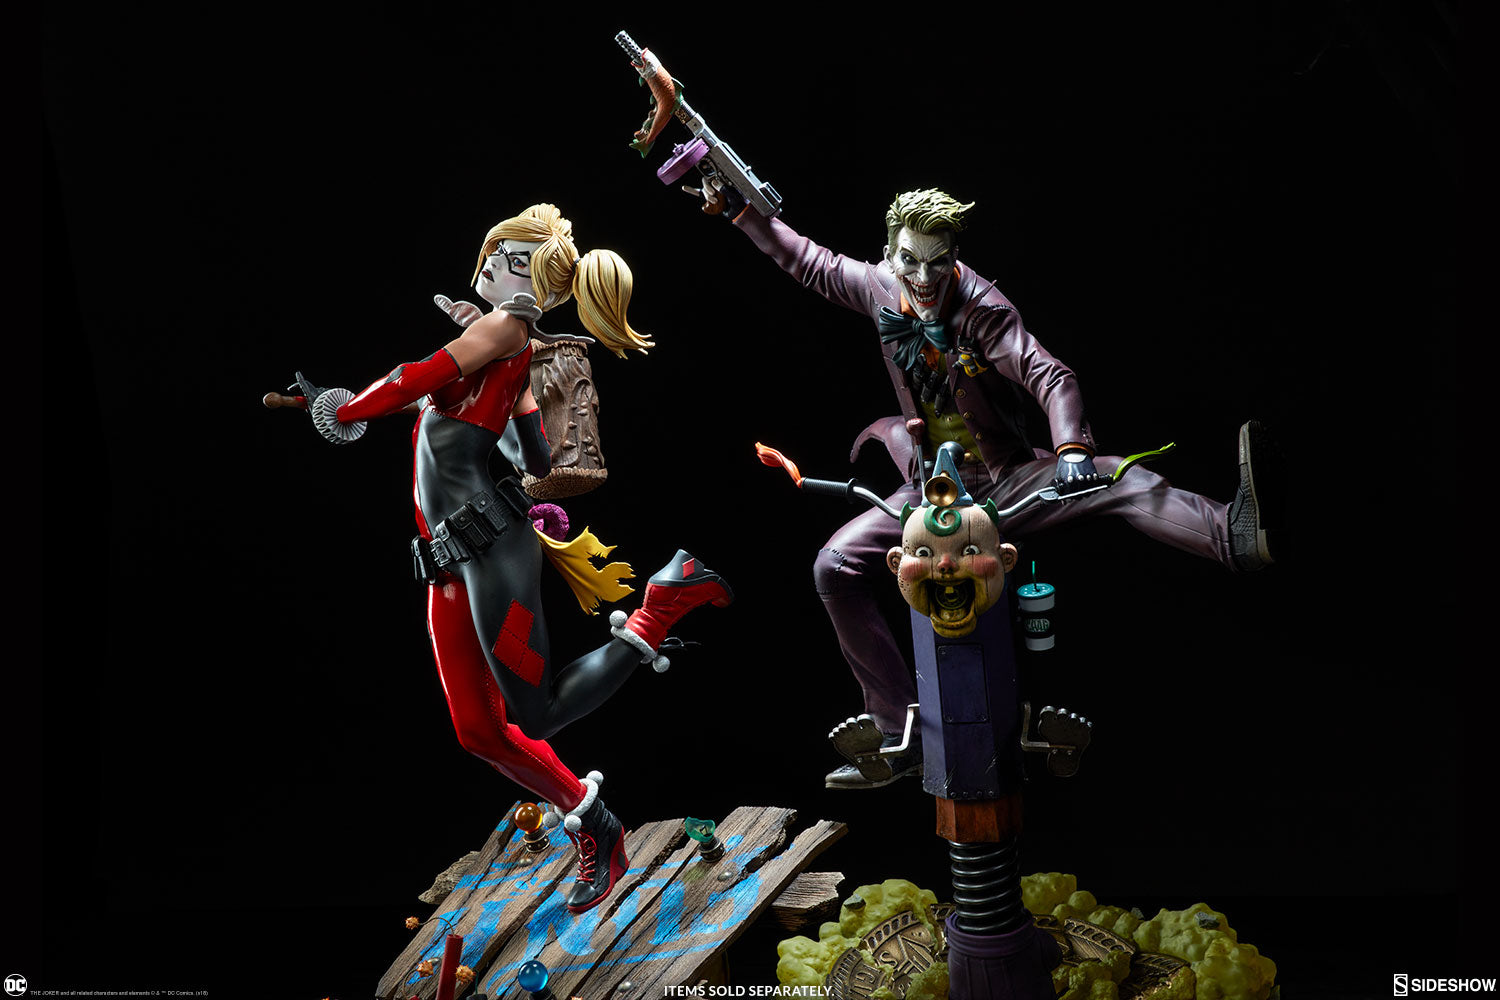 Sideshow Collectibles - Premium Format Figure - DC Comics - The Joker